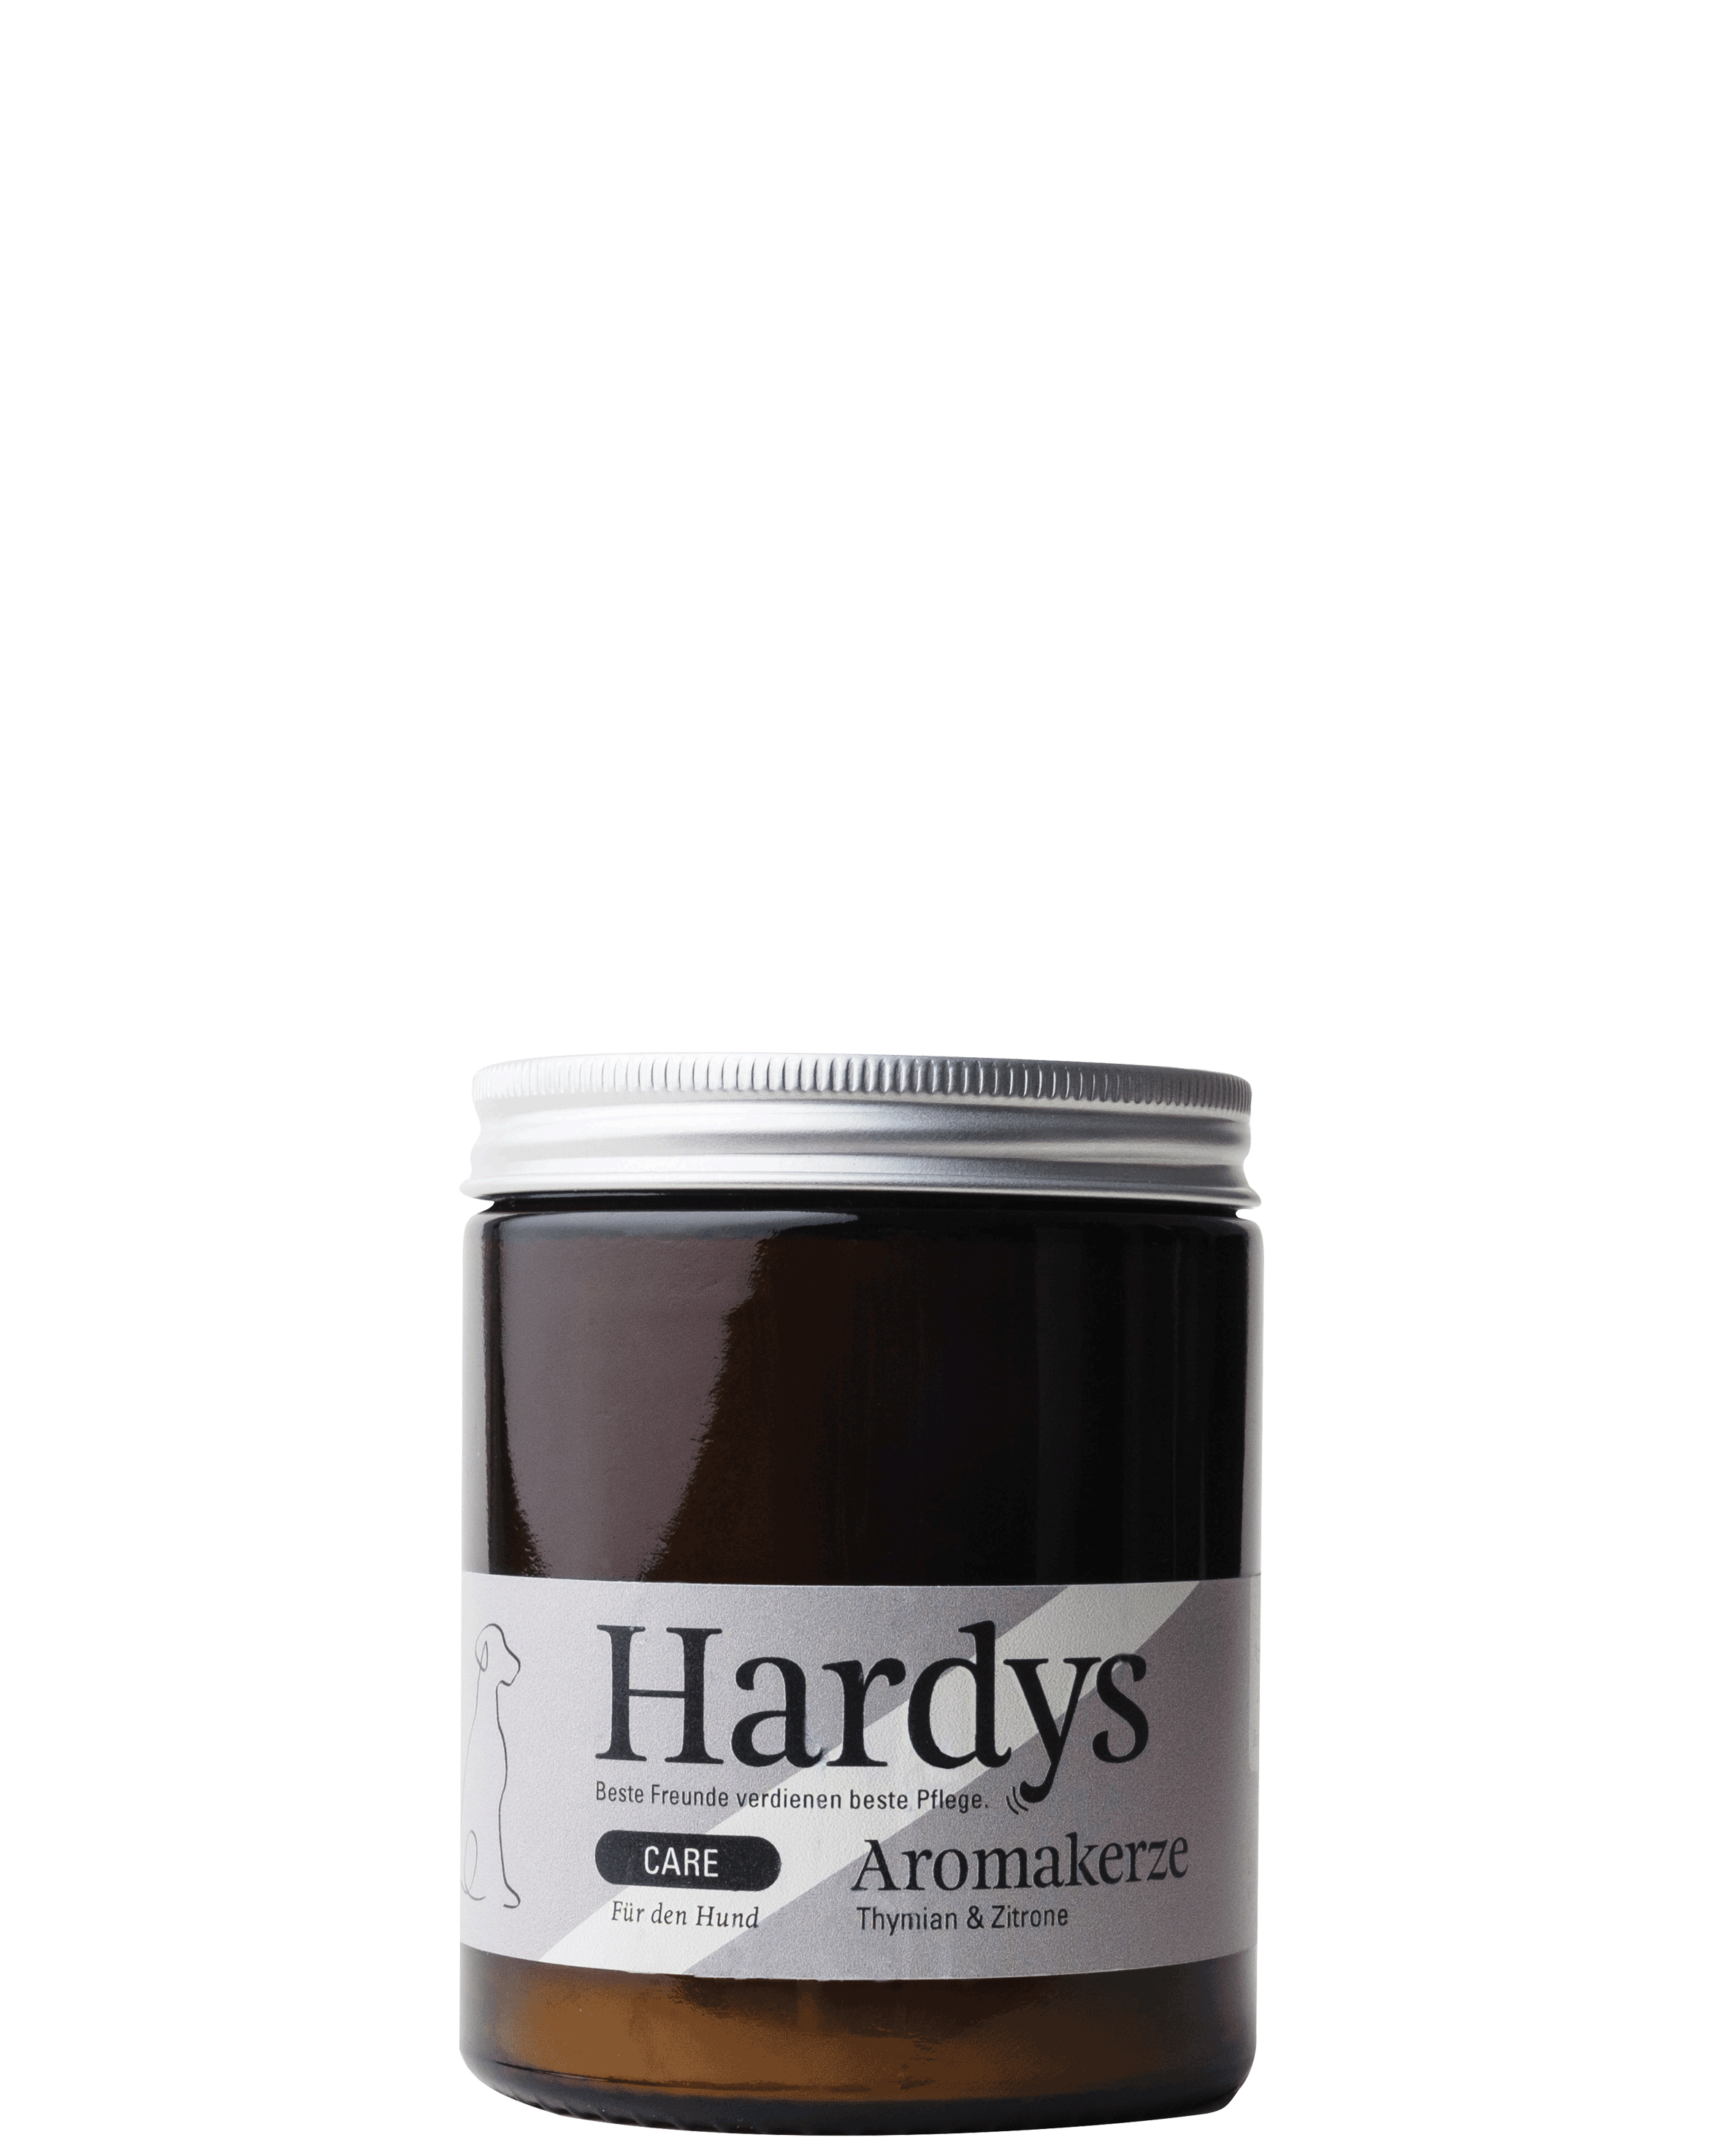 Hardys Care Aromakerze Thymian & Zitrone, 180 ml